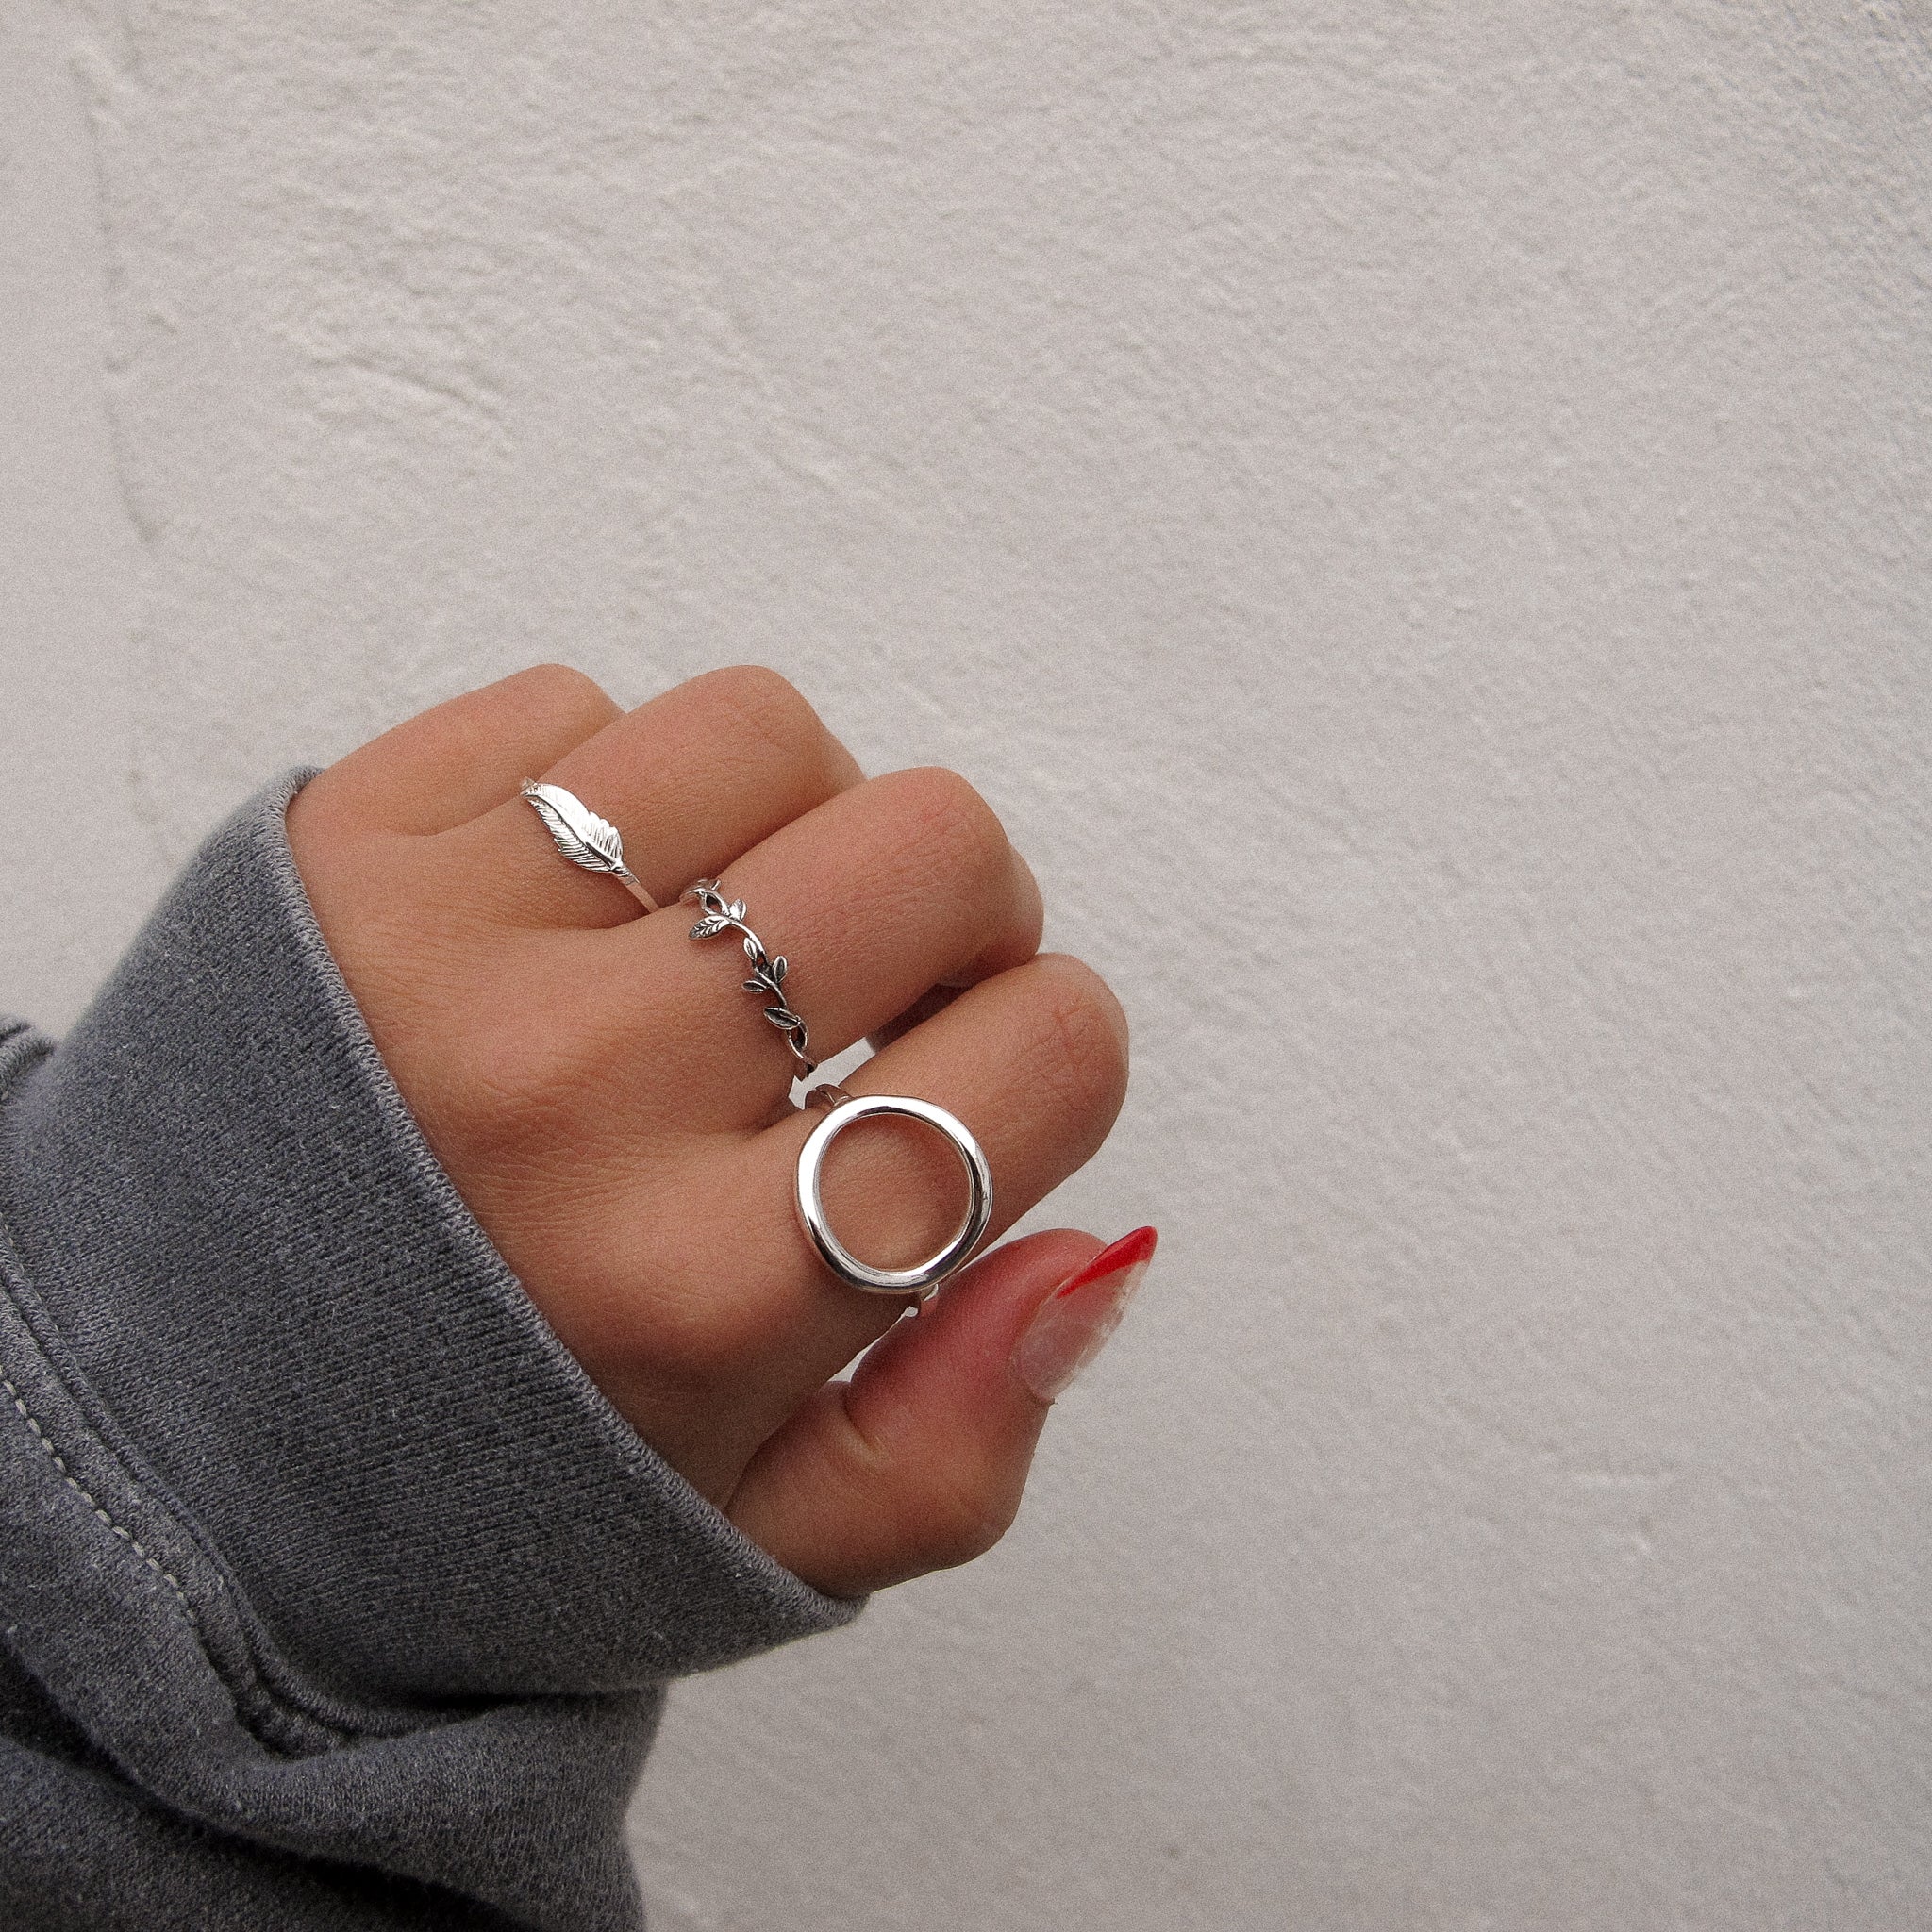 "Juno” Leaf Sterling Silver Ring